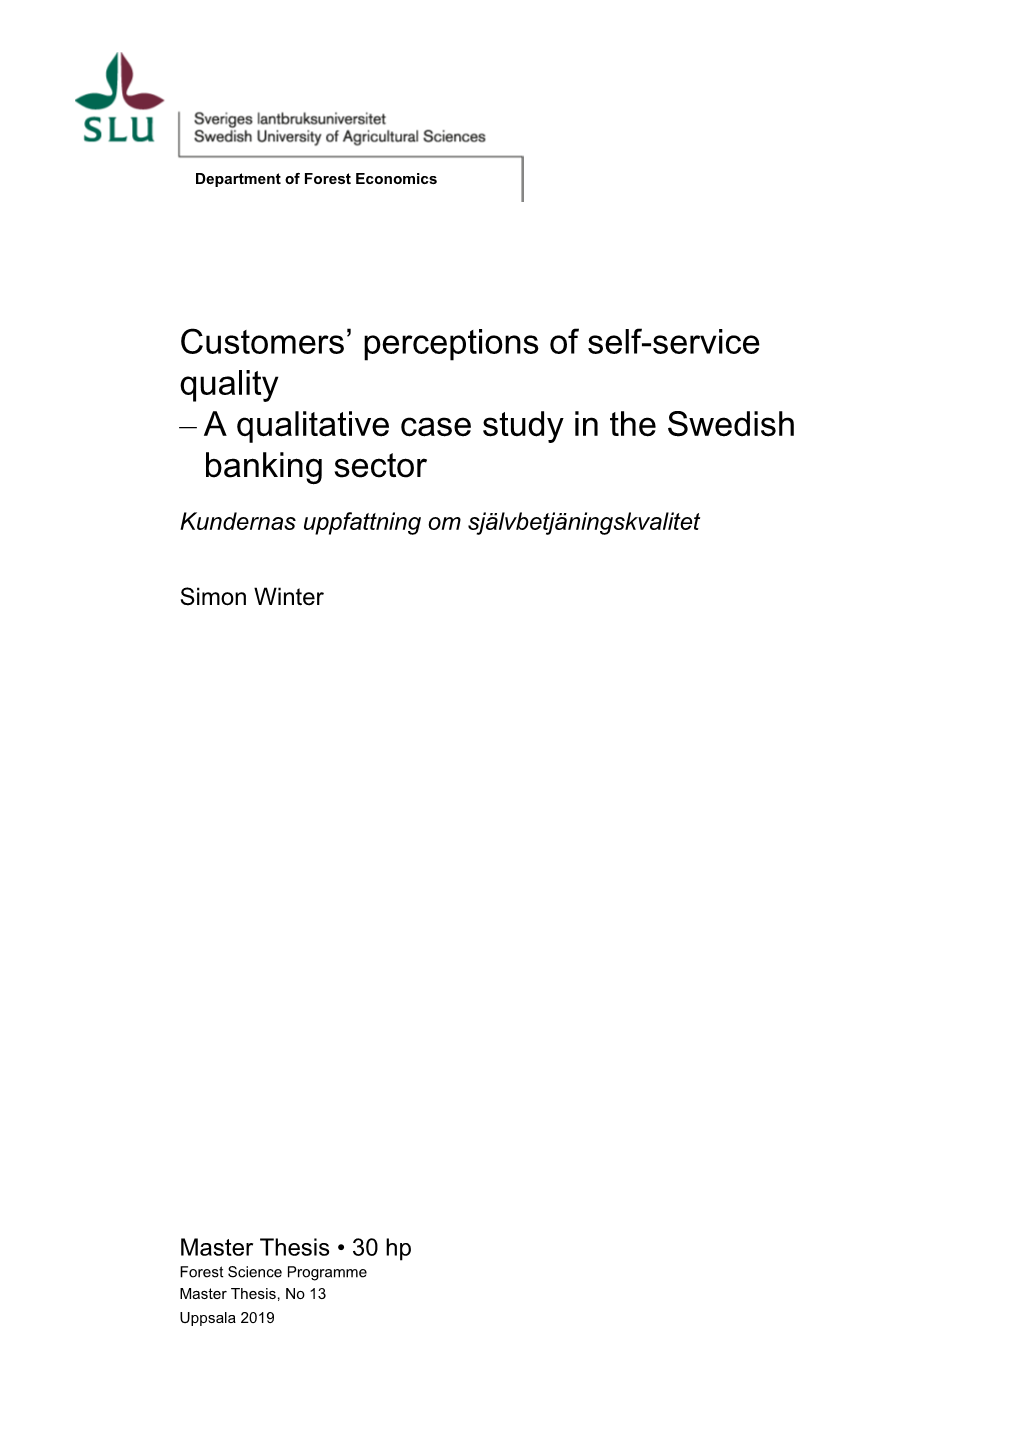 Customers' Perceptions of Self-Service Quality